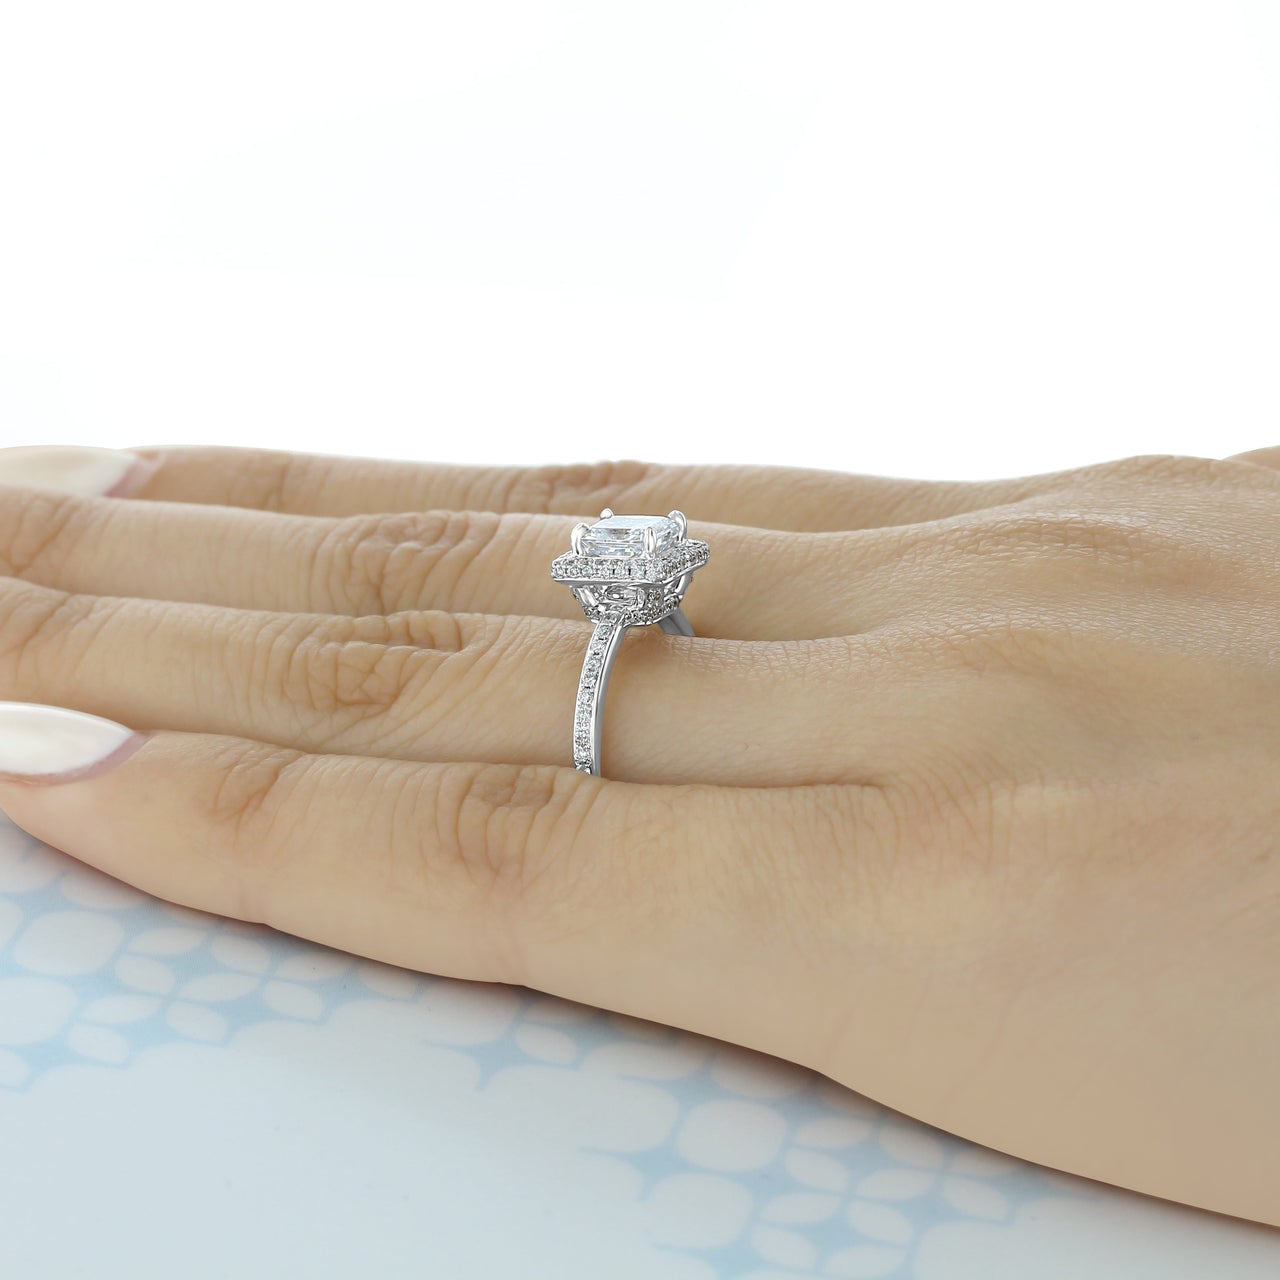 Ethically Princess Cut Diamond Ring